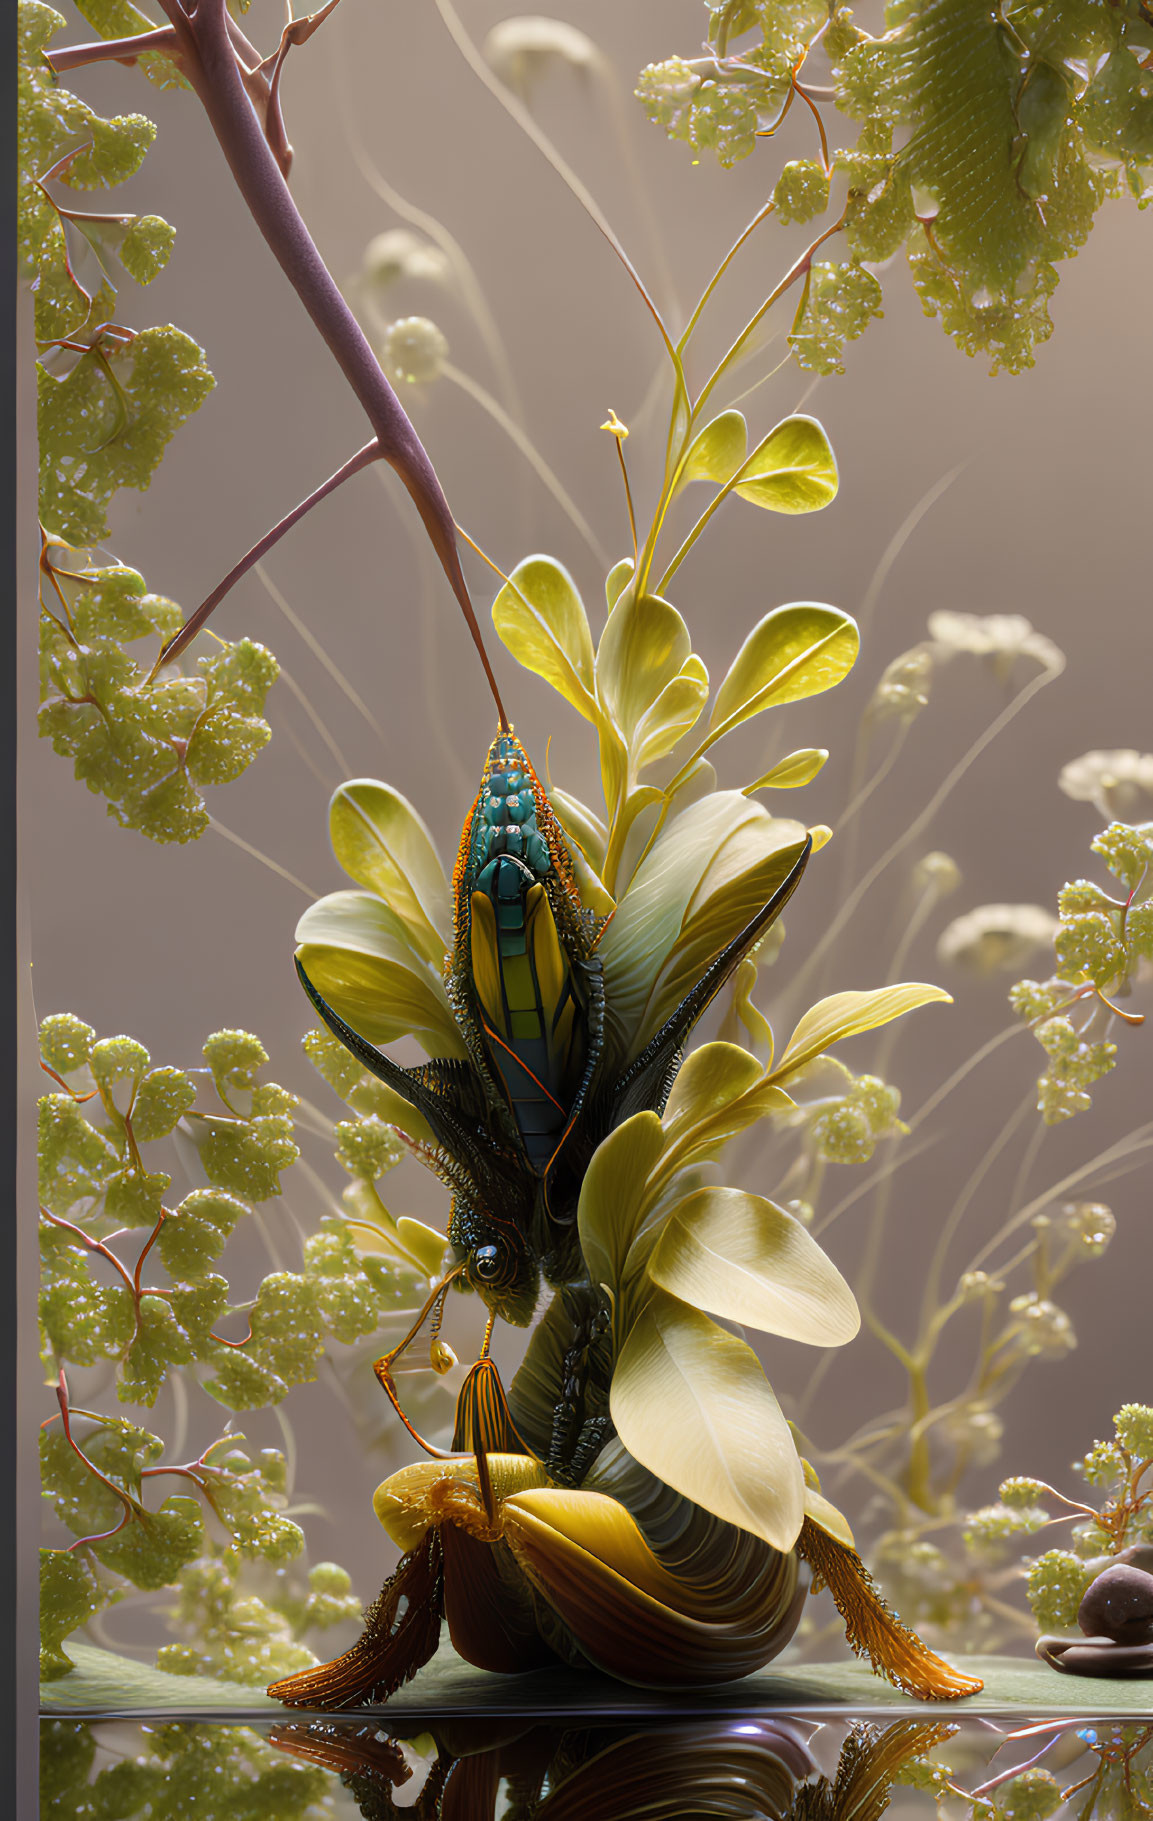 Vibrant grasshopper on fantasy-inspired foliage against warm backdrop